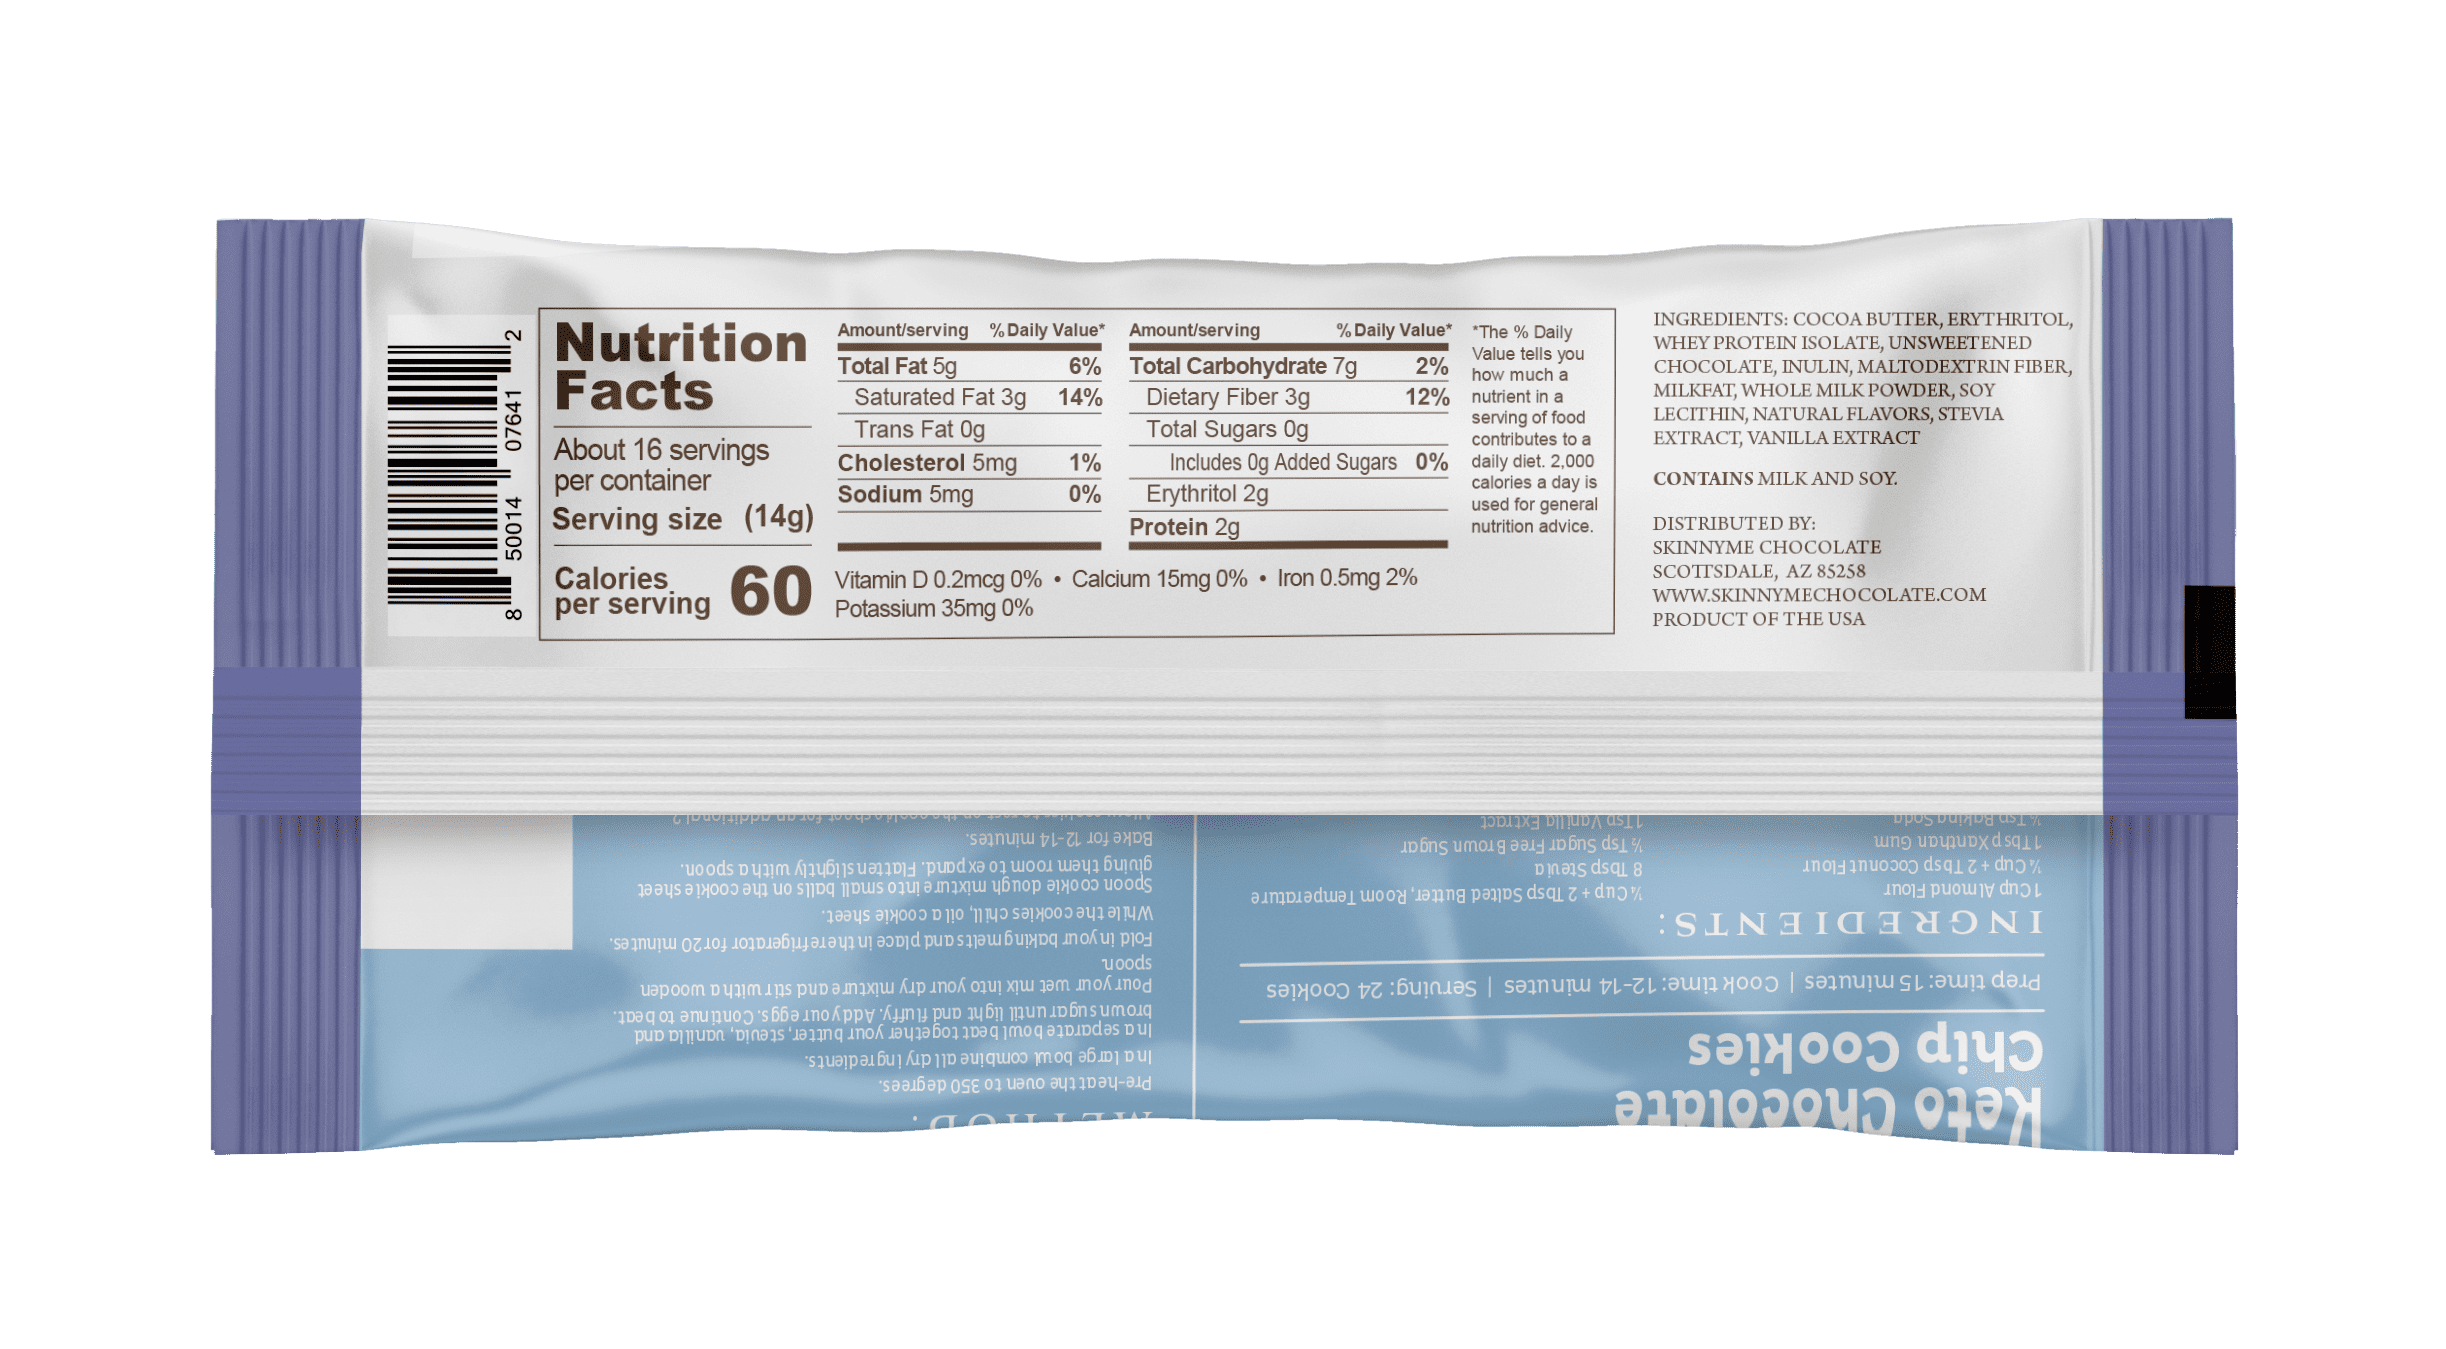 SkinnyMe Milk Baking Melts 12 units per case 8.0 oz